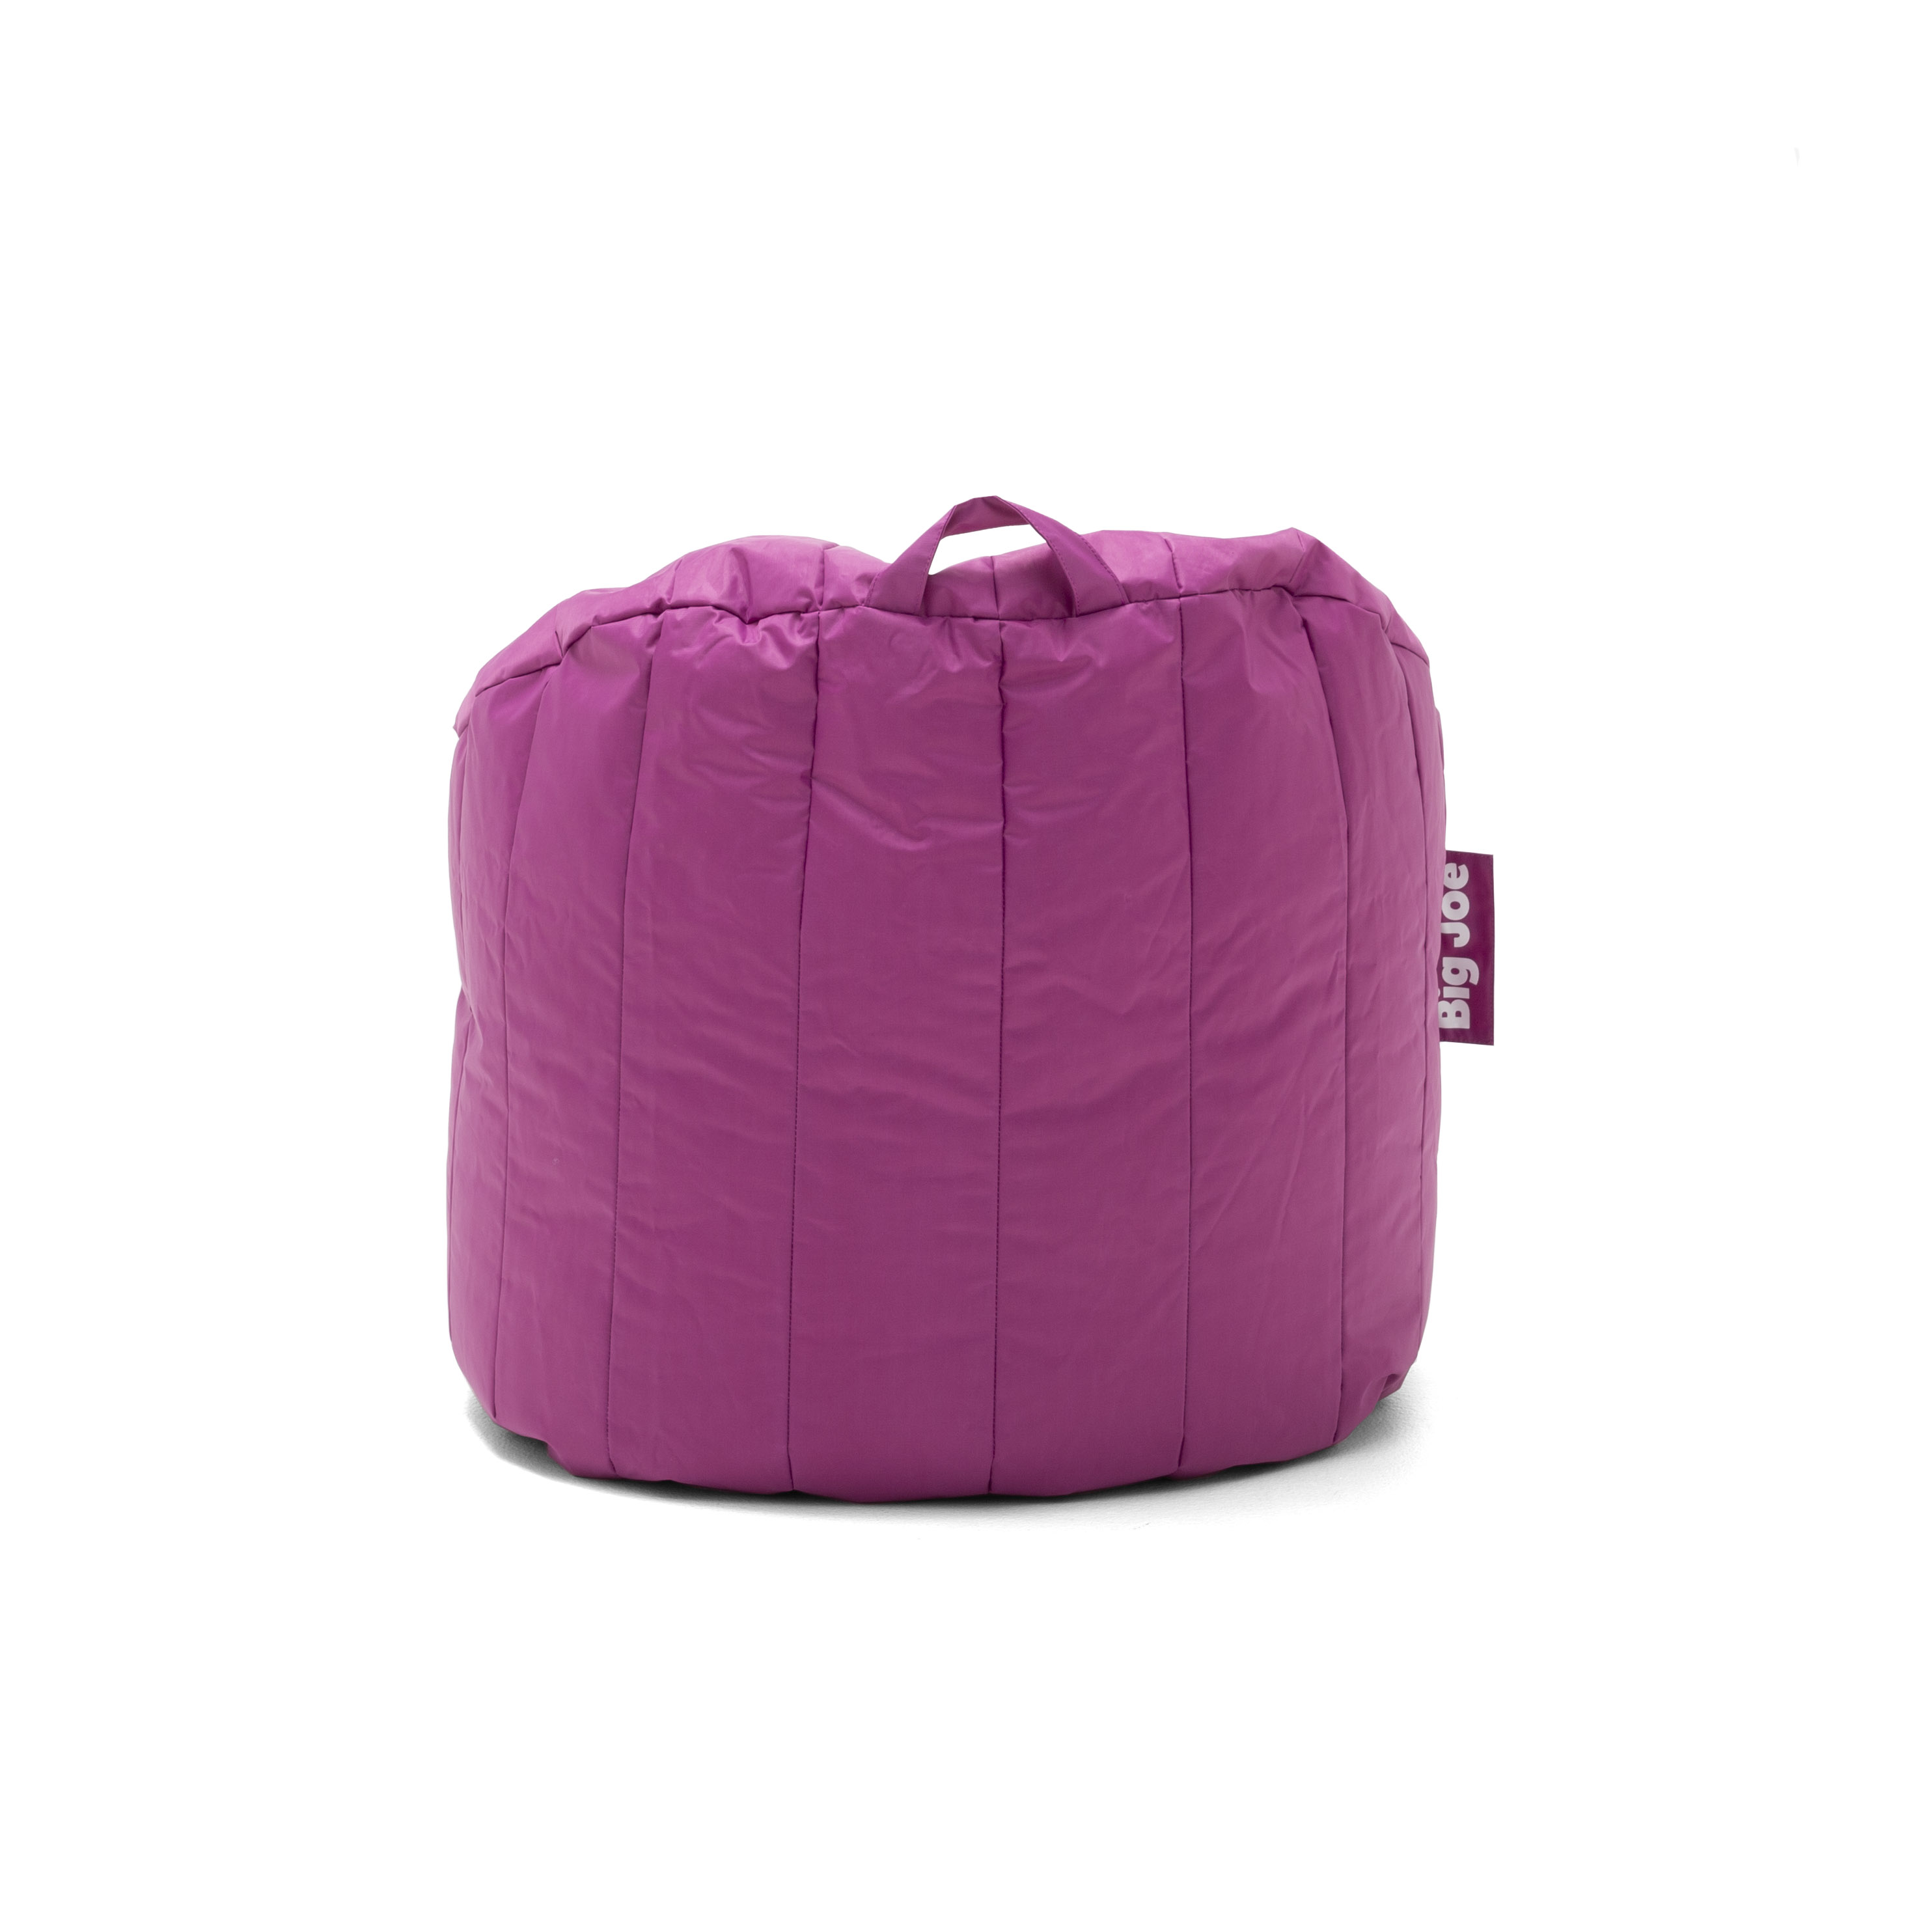 Big Joe Lumin Bean Bag Chair, Available in Multiple Colors - image 3 of 4